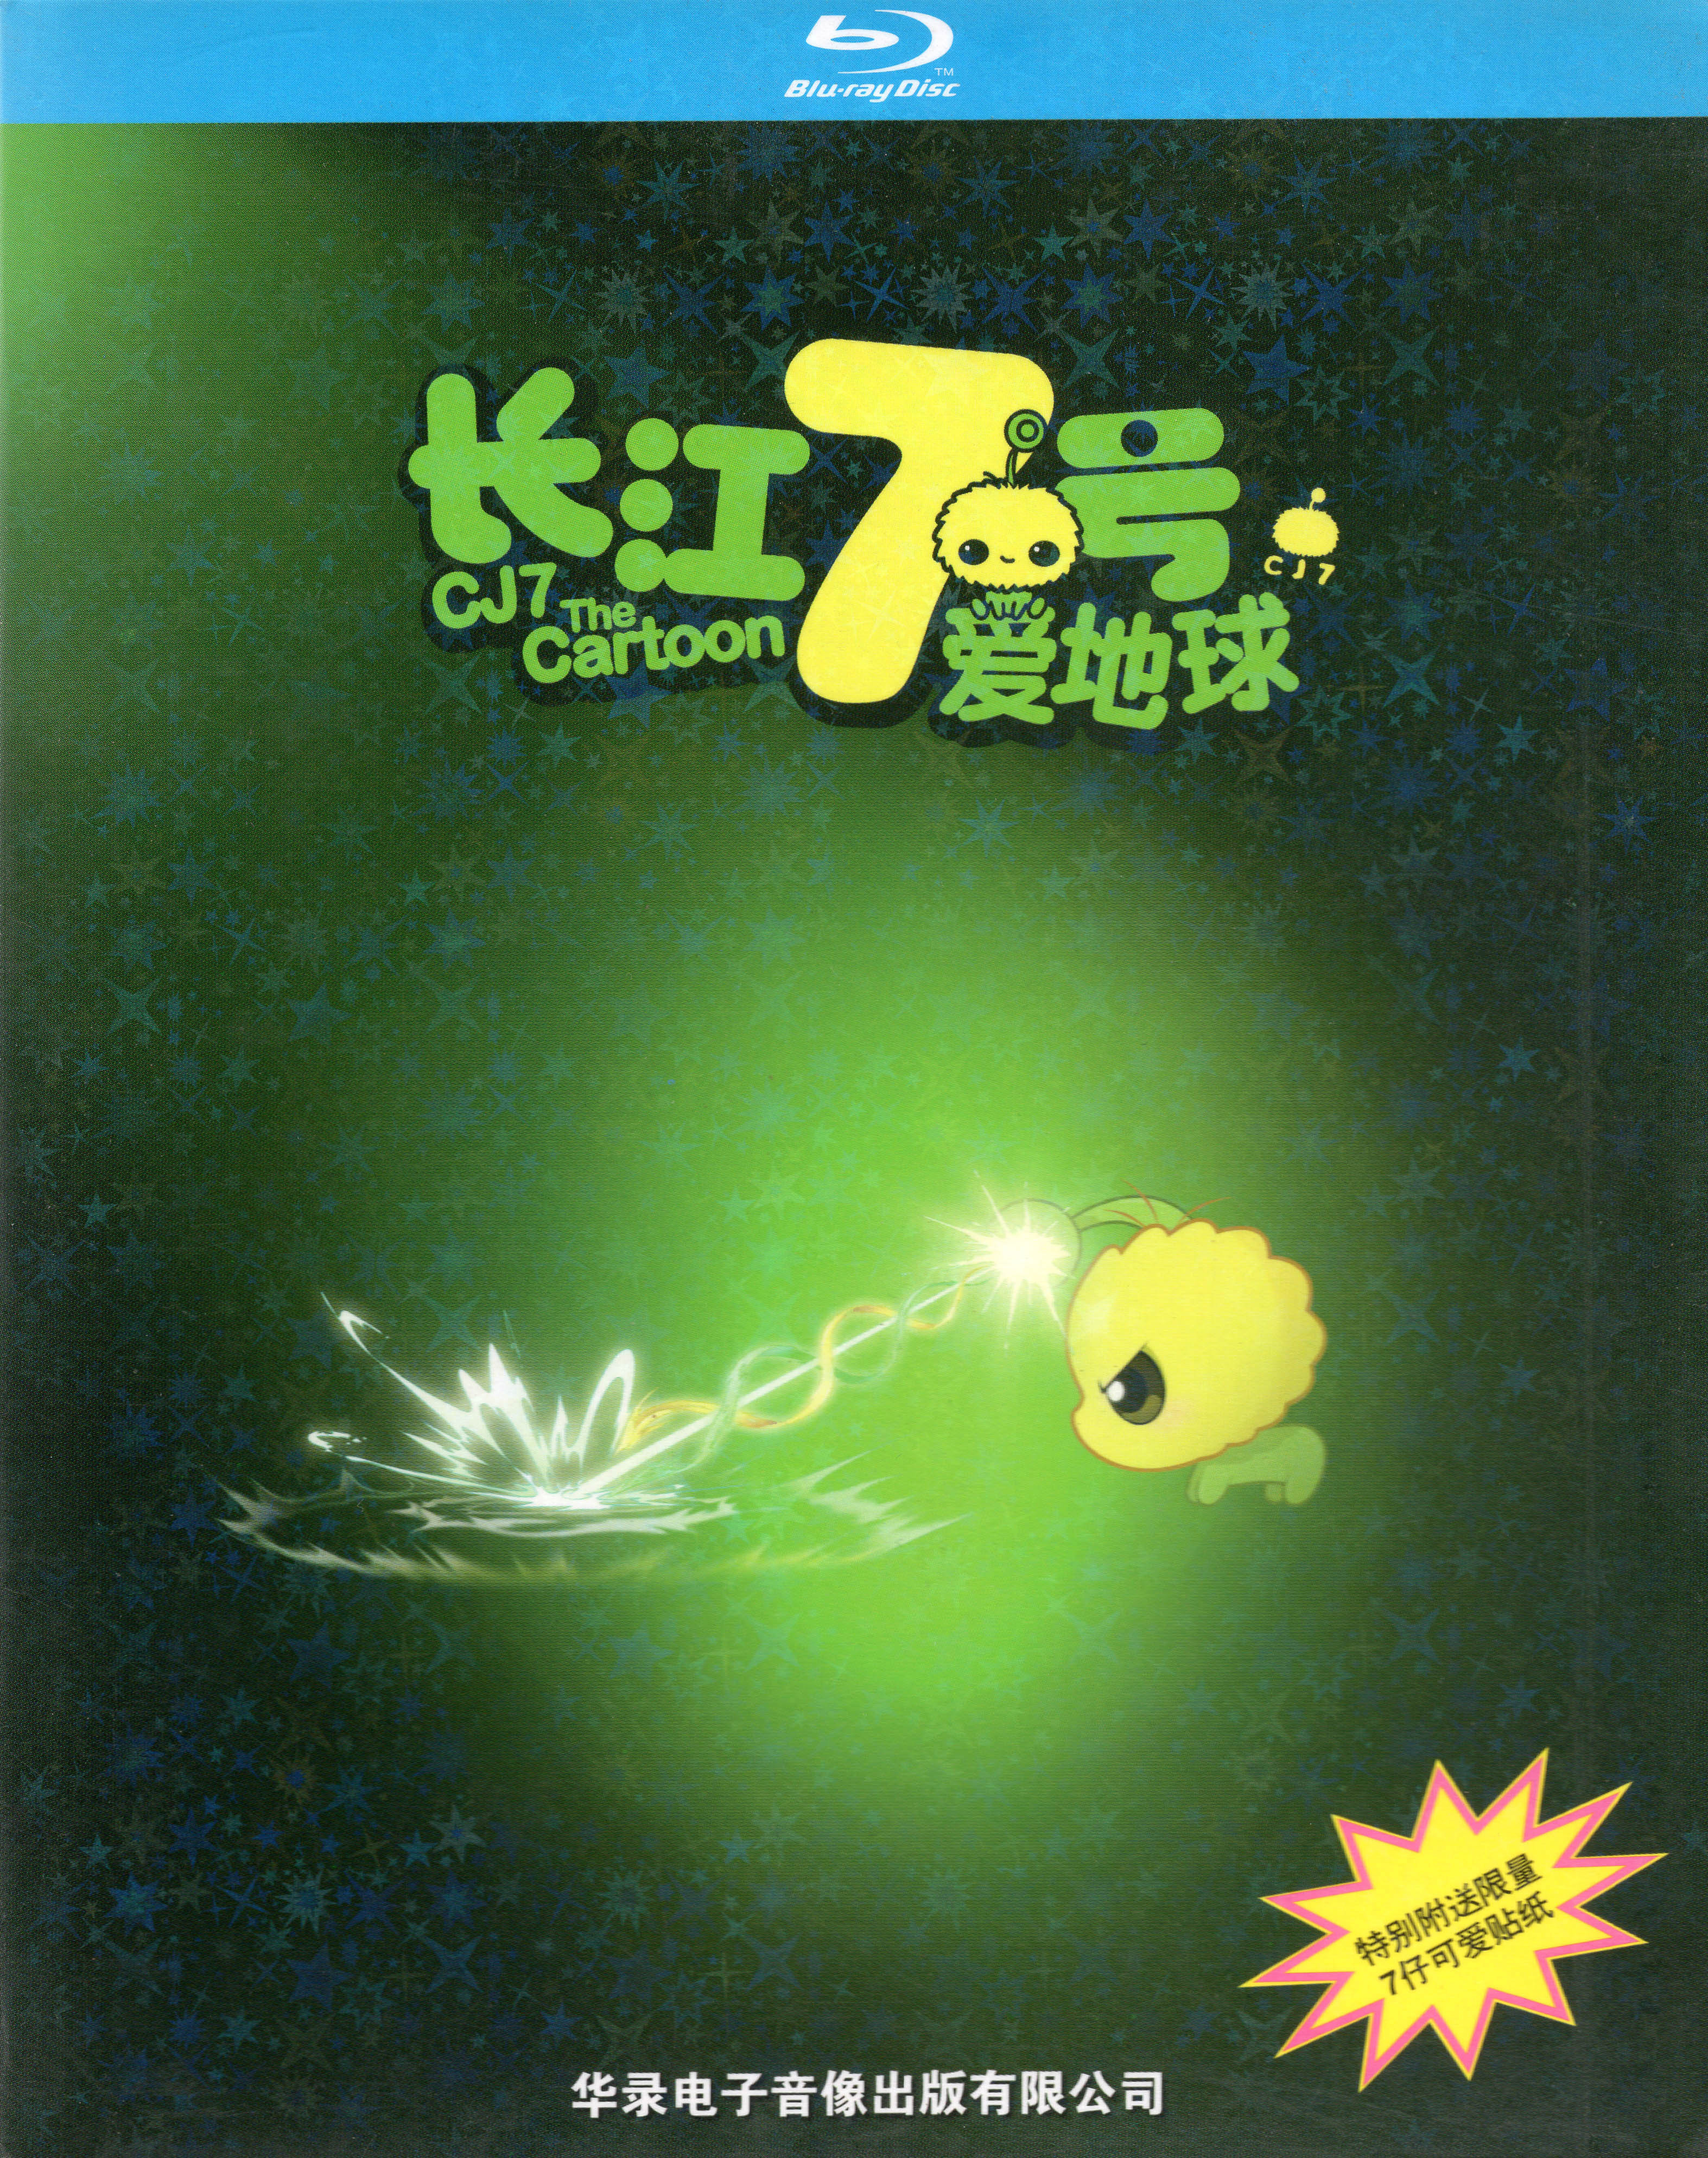 CJ7:The Cartoon Blu-ray (长江7号爱地球) (China)